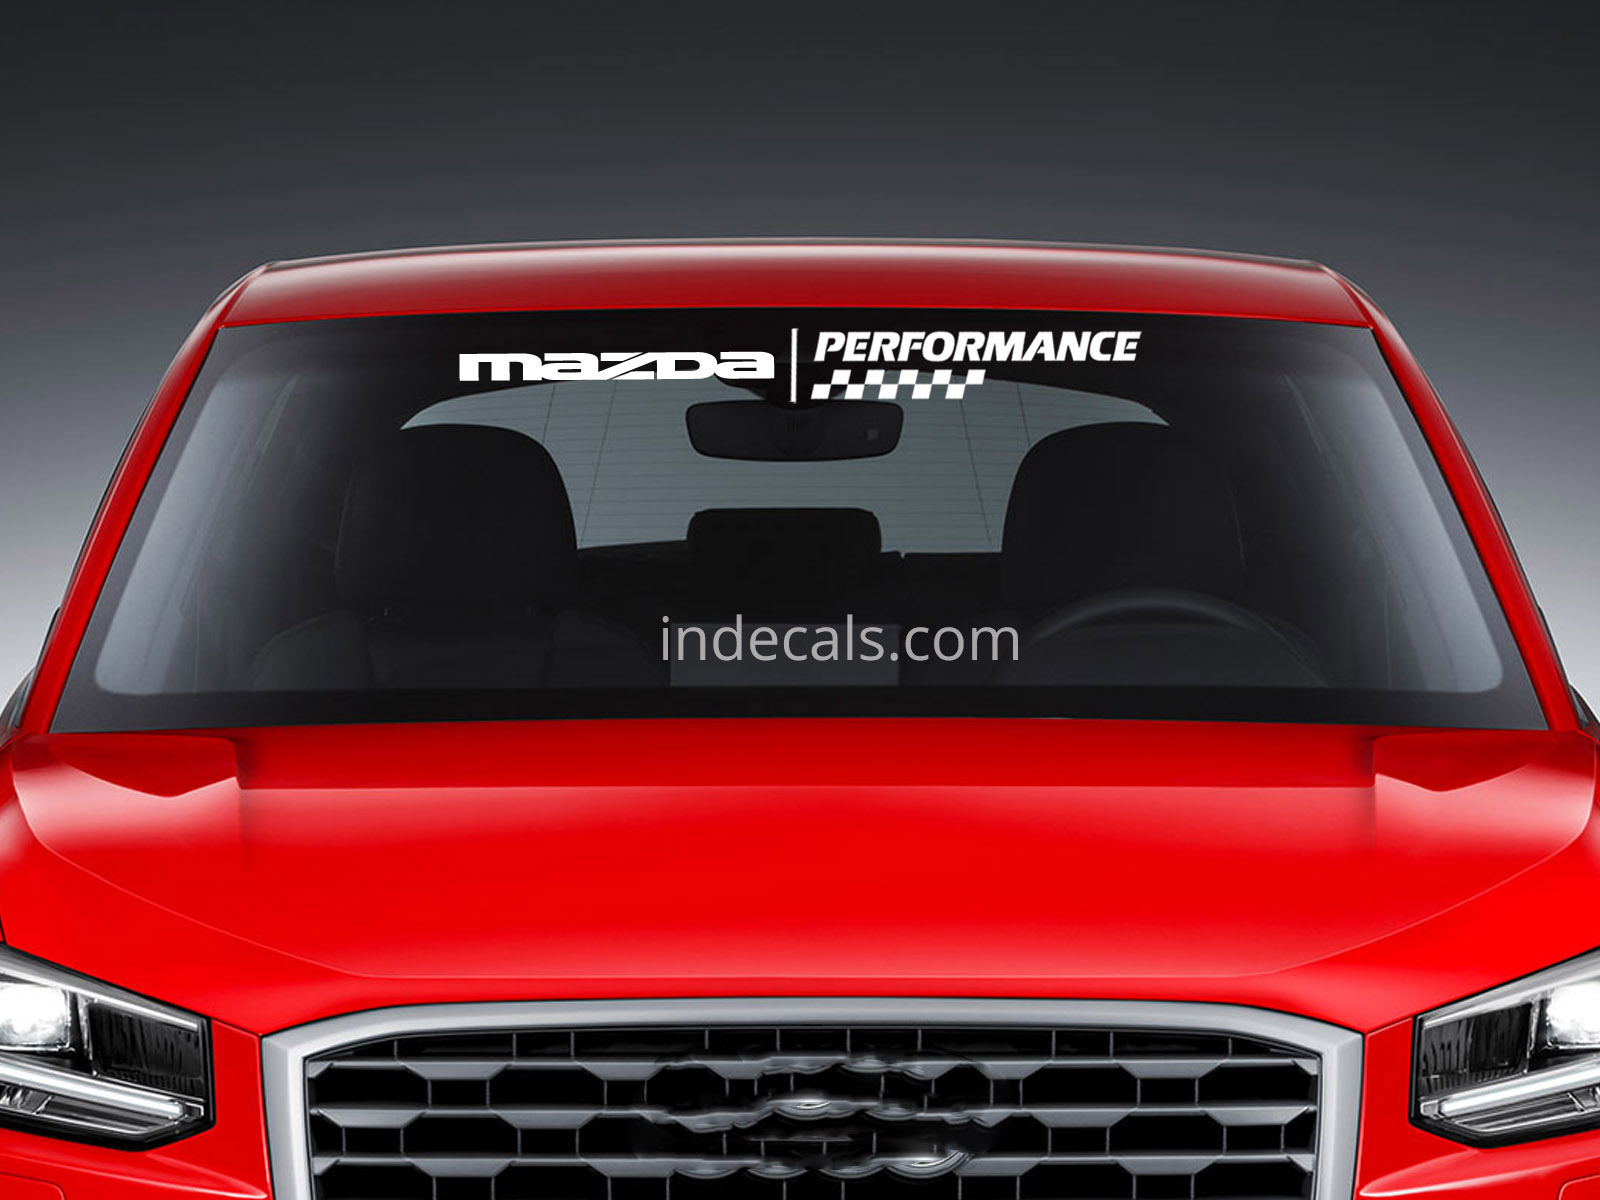 1 x Mazda Performance Sticker for Windshield or Back Window - White